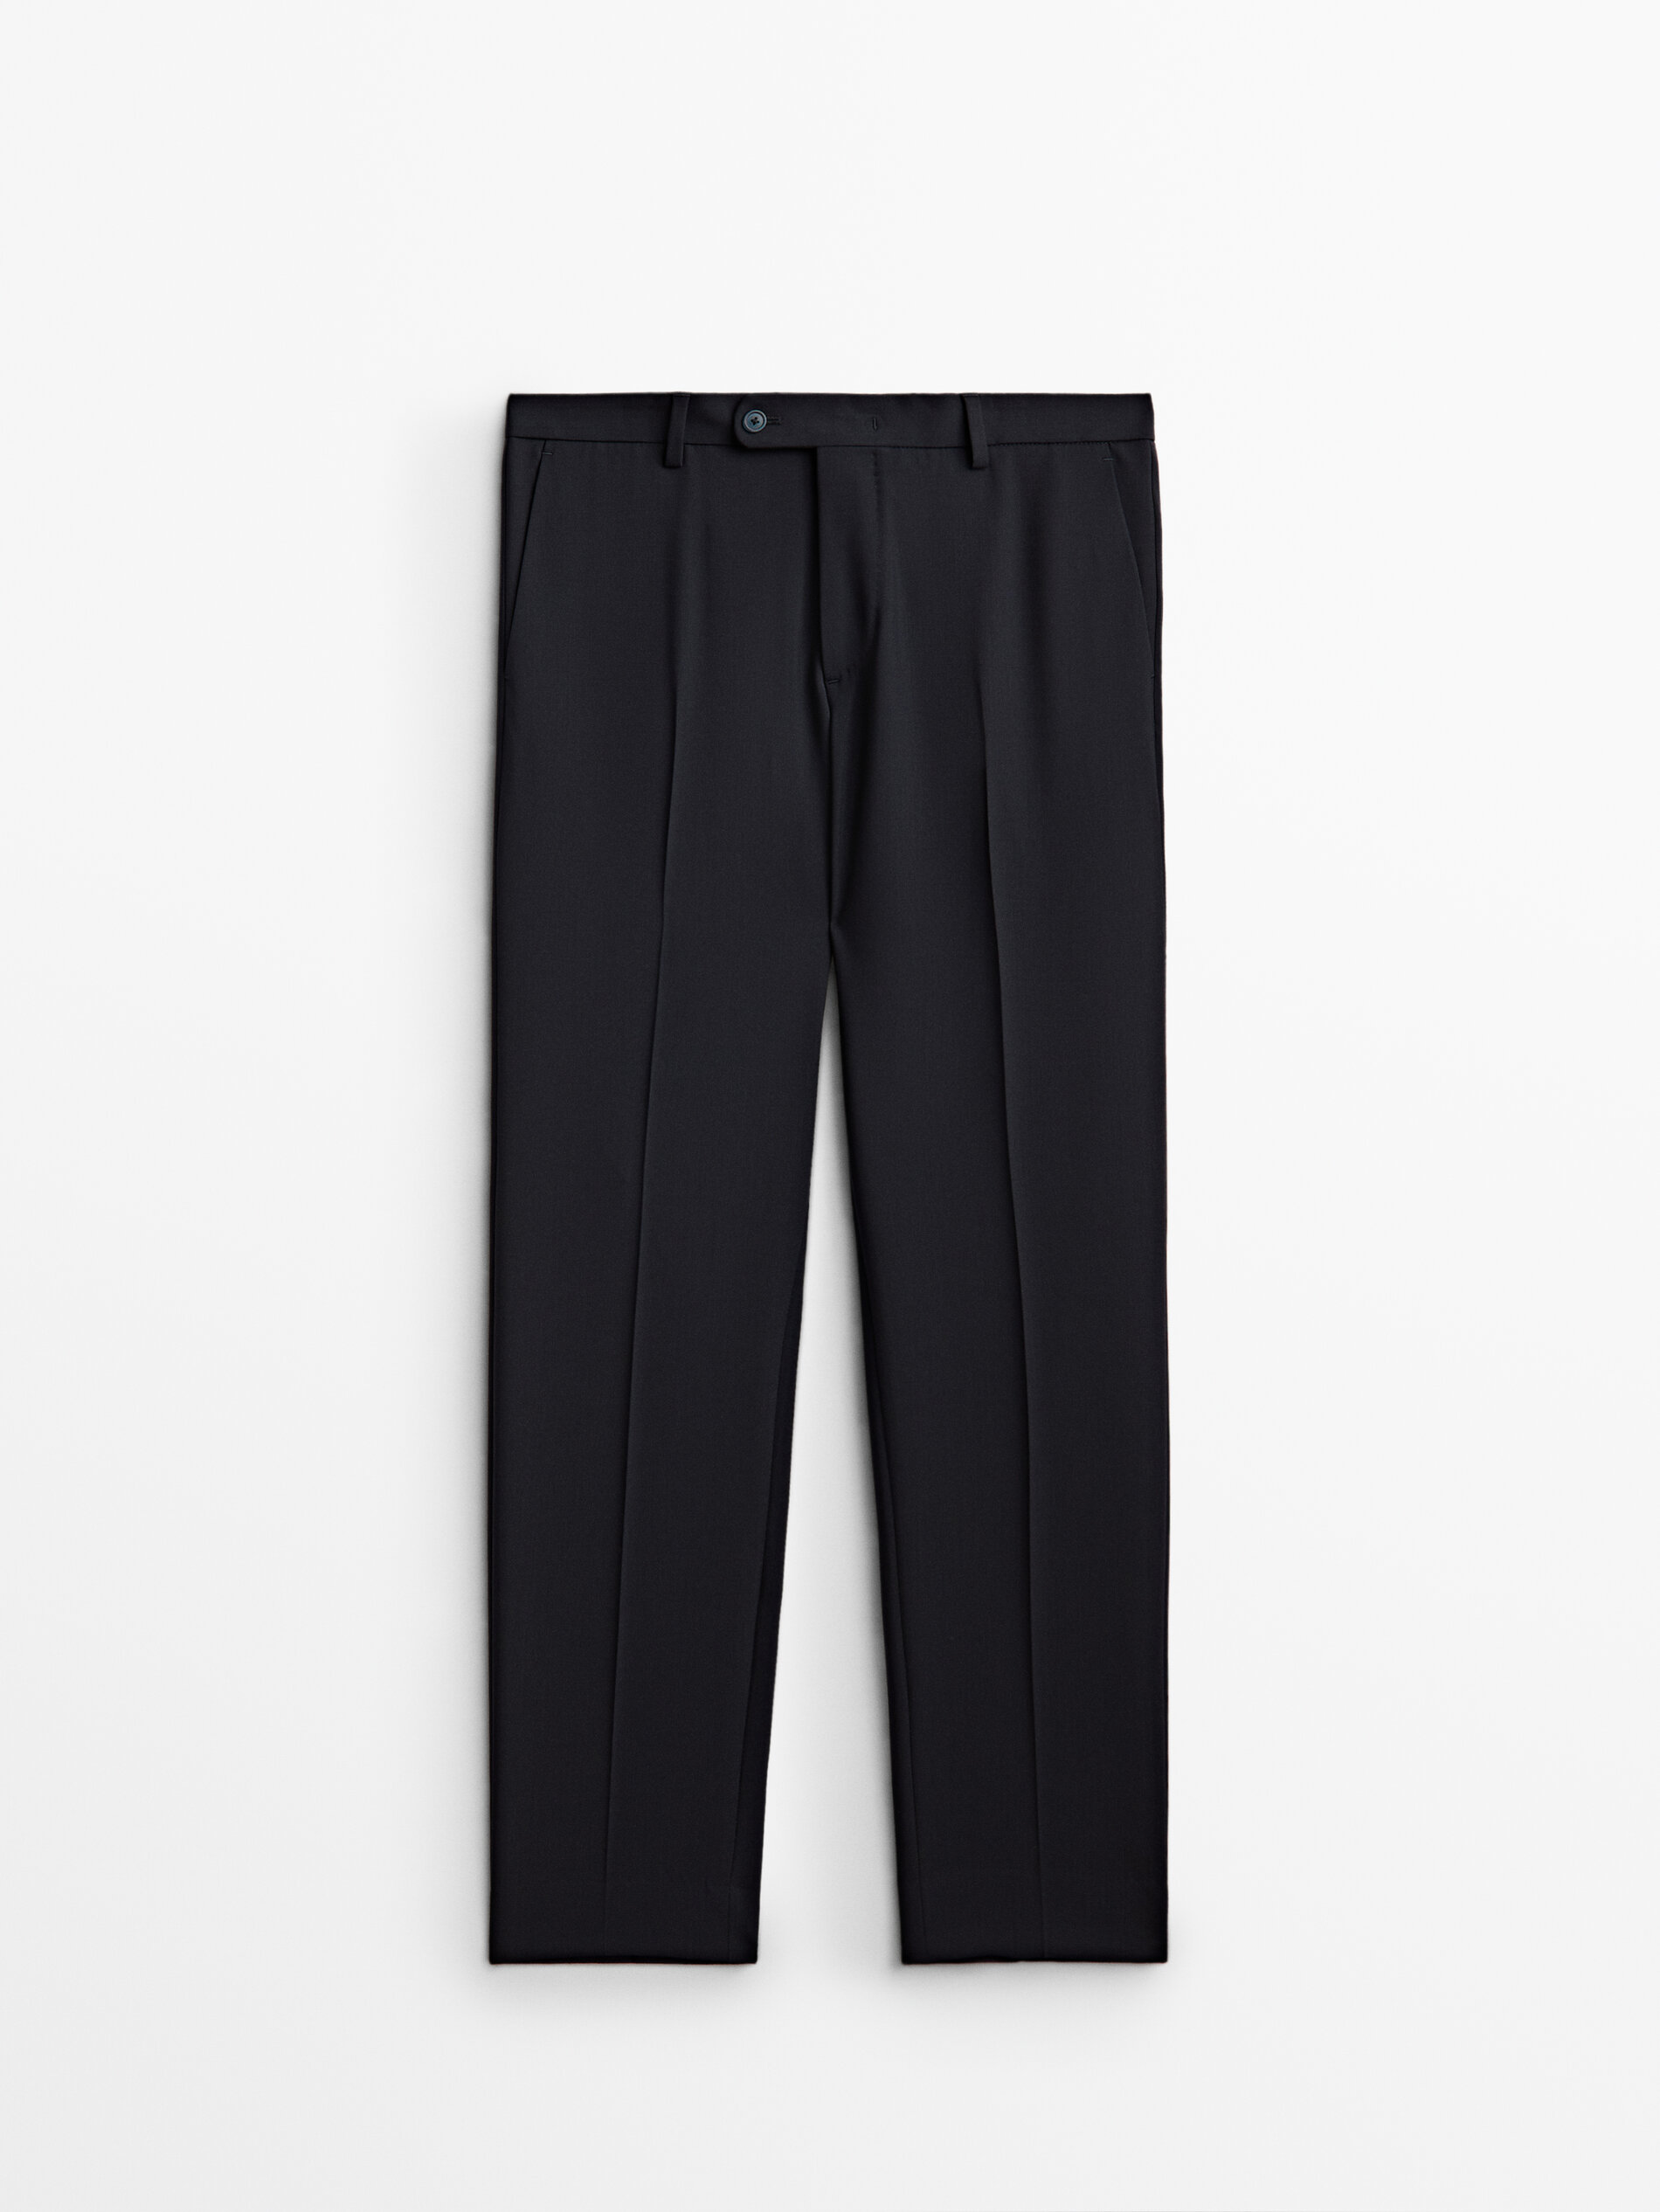 Uniqlo Stretch Flat-Front Dress Pants Pants for Men | Mercari